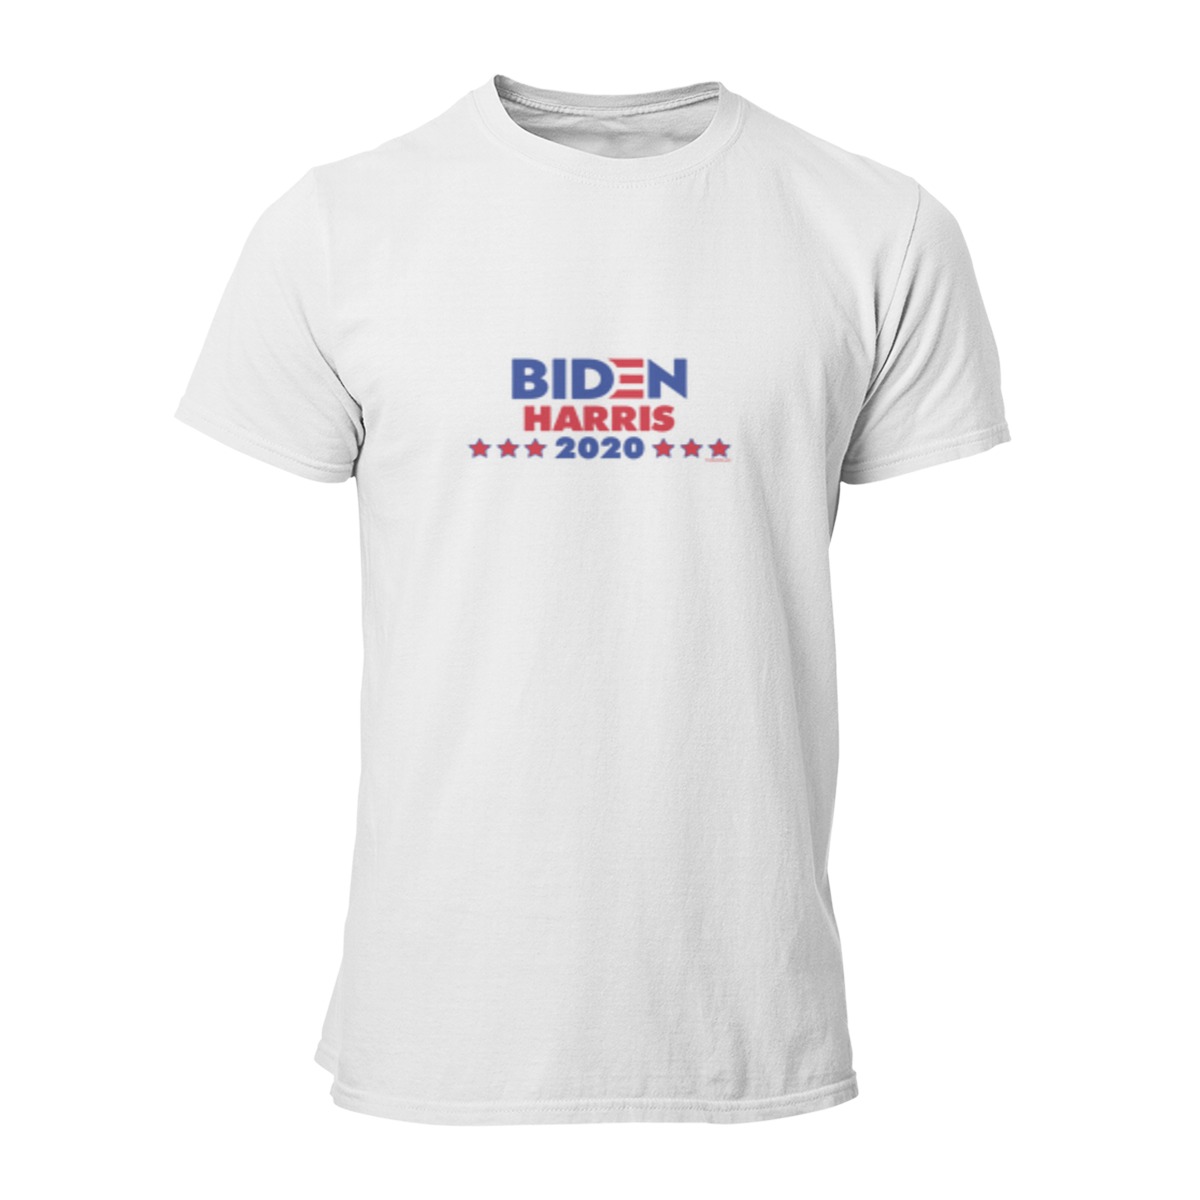 3 Biden Harris Men's T Shirt Novelty Tops Bitumen Bike Life Tees Clothes Cotton Printed T-Shirt Plus Size Tees 3312